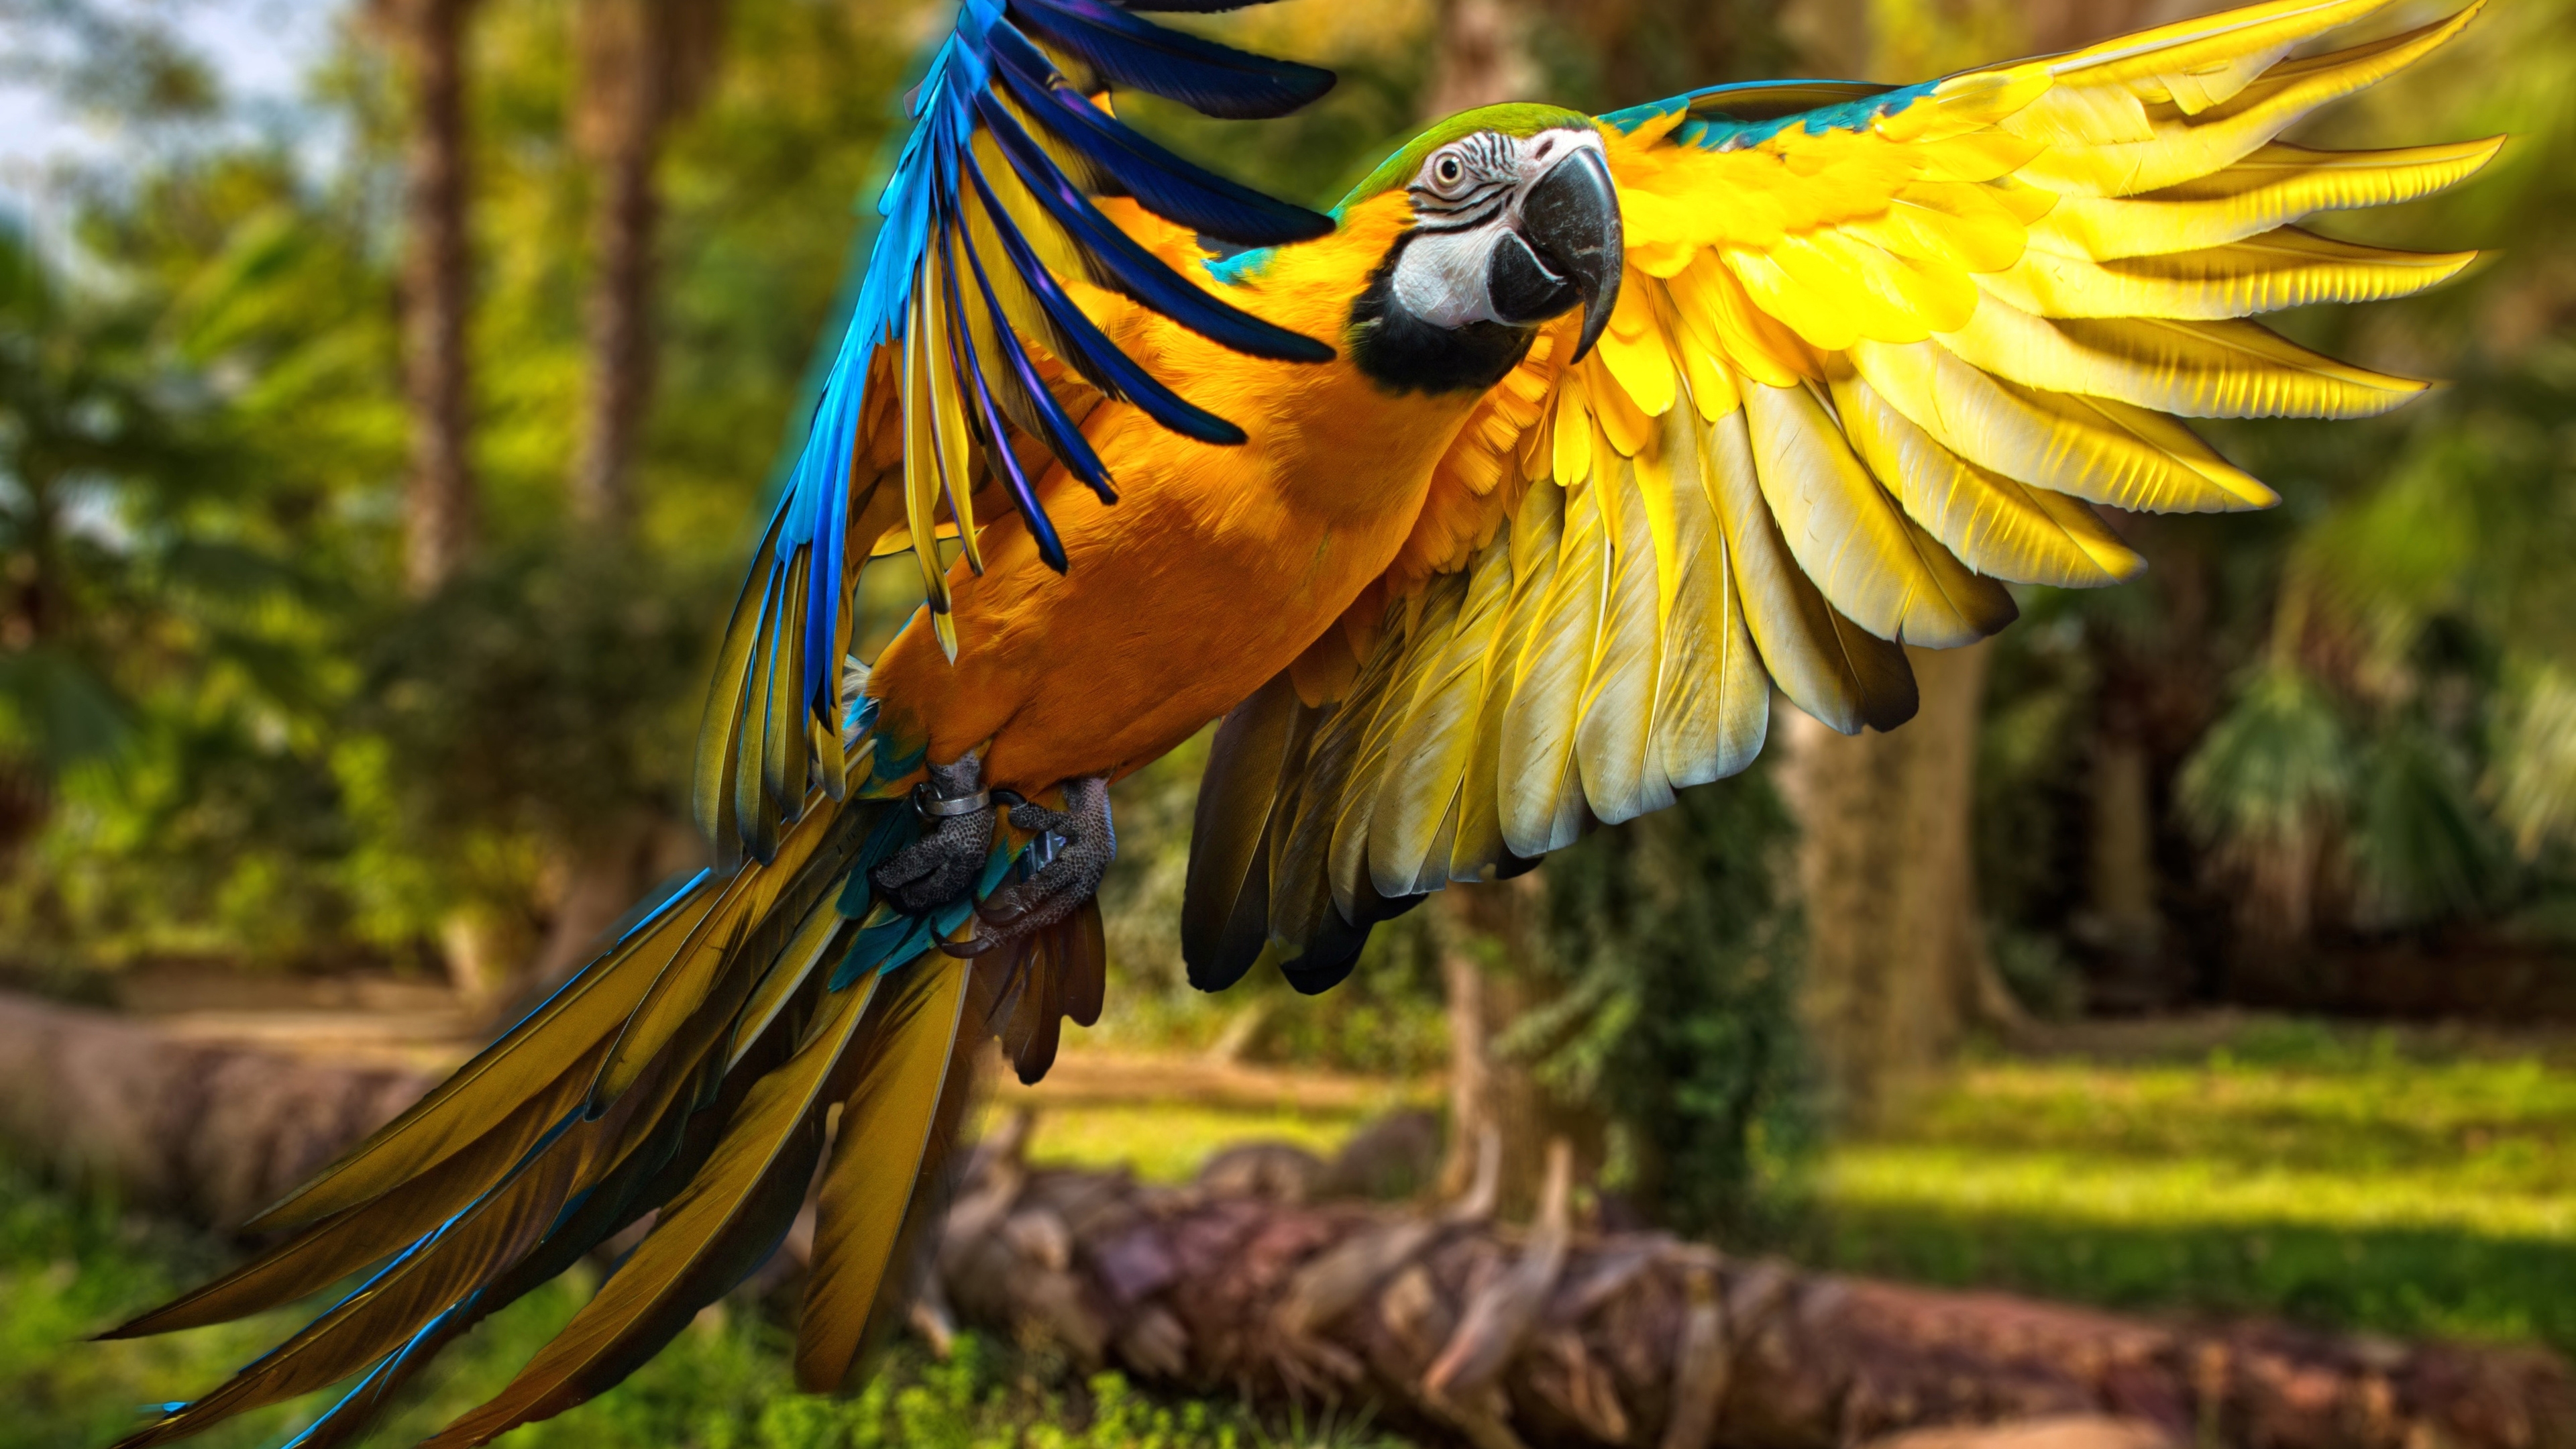 Macau parrot in flight